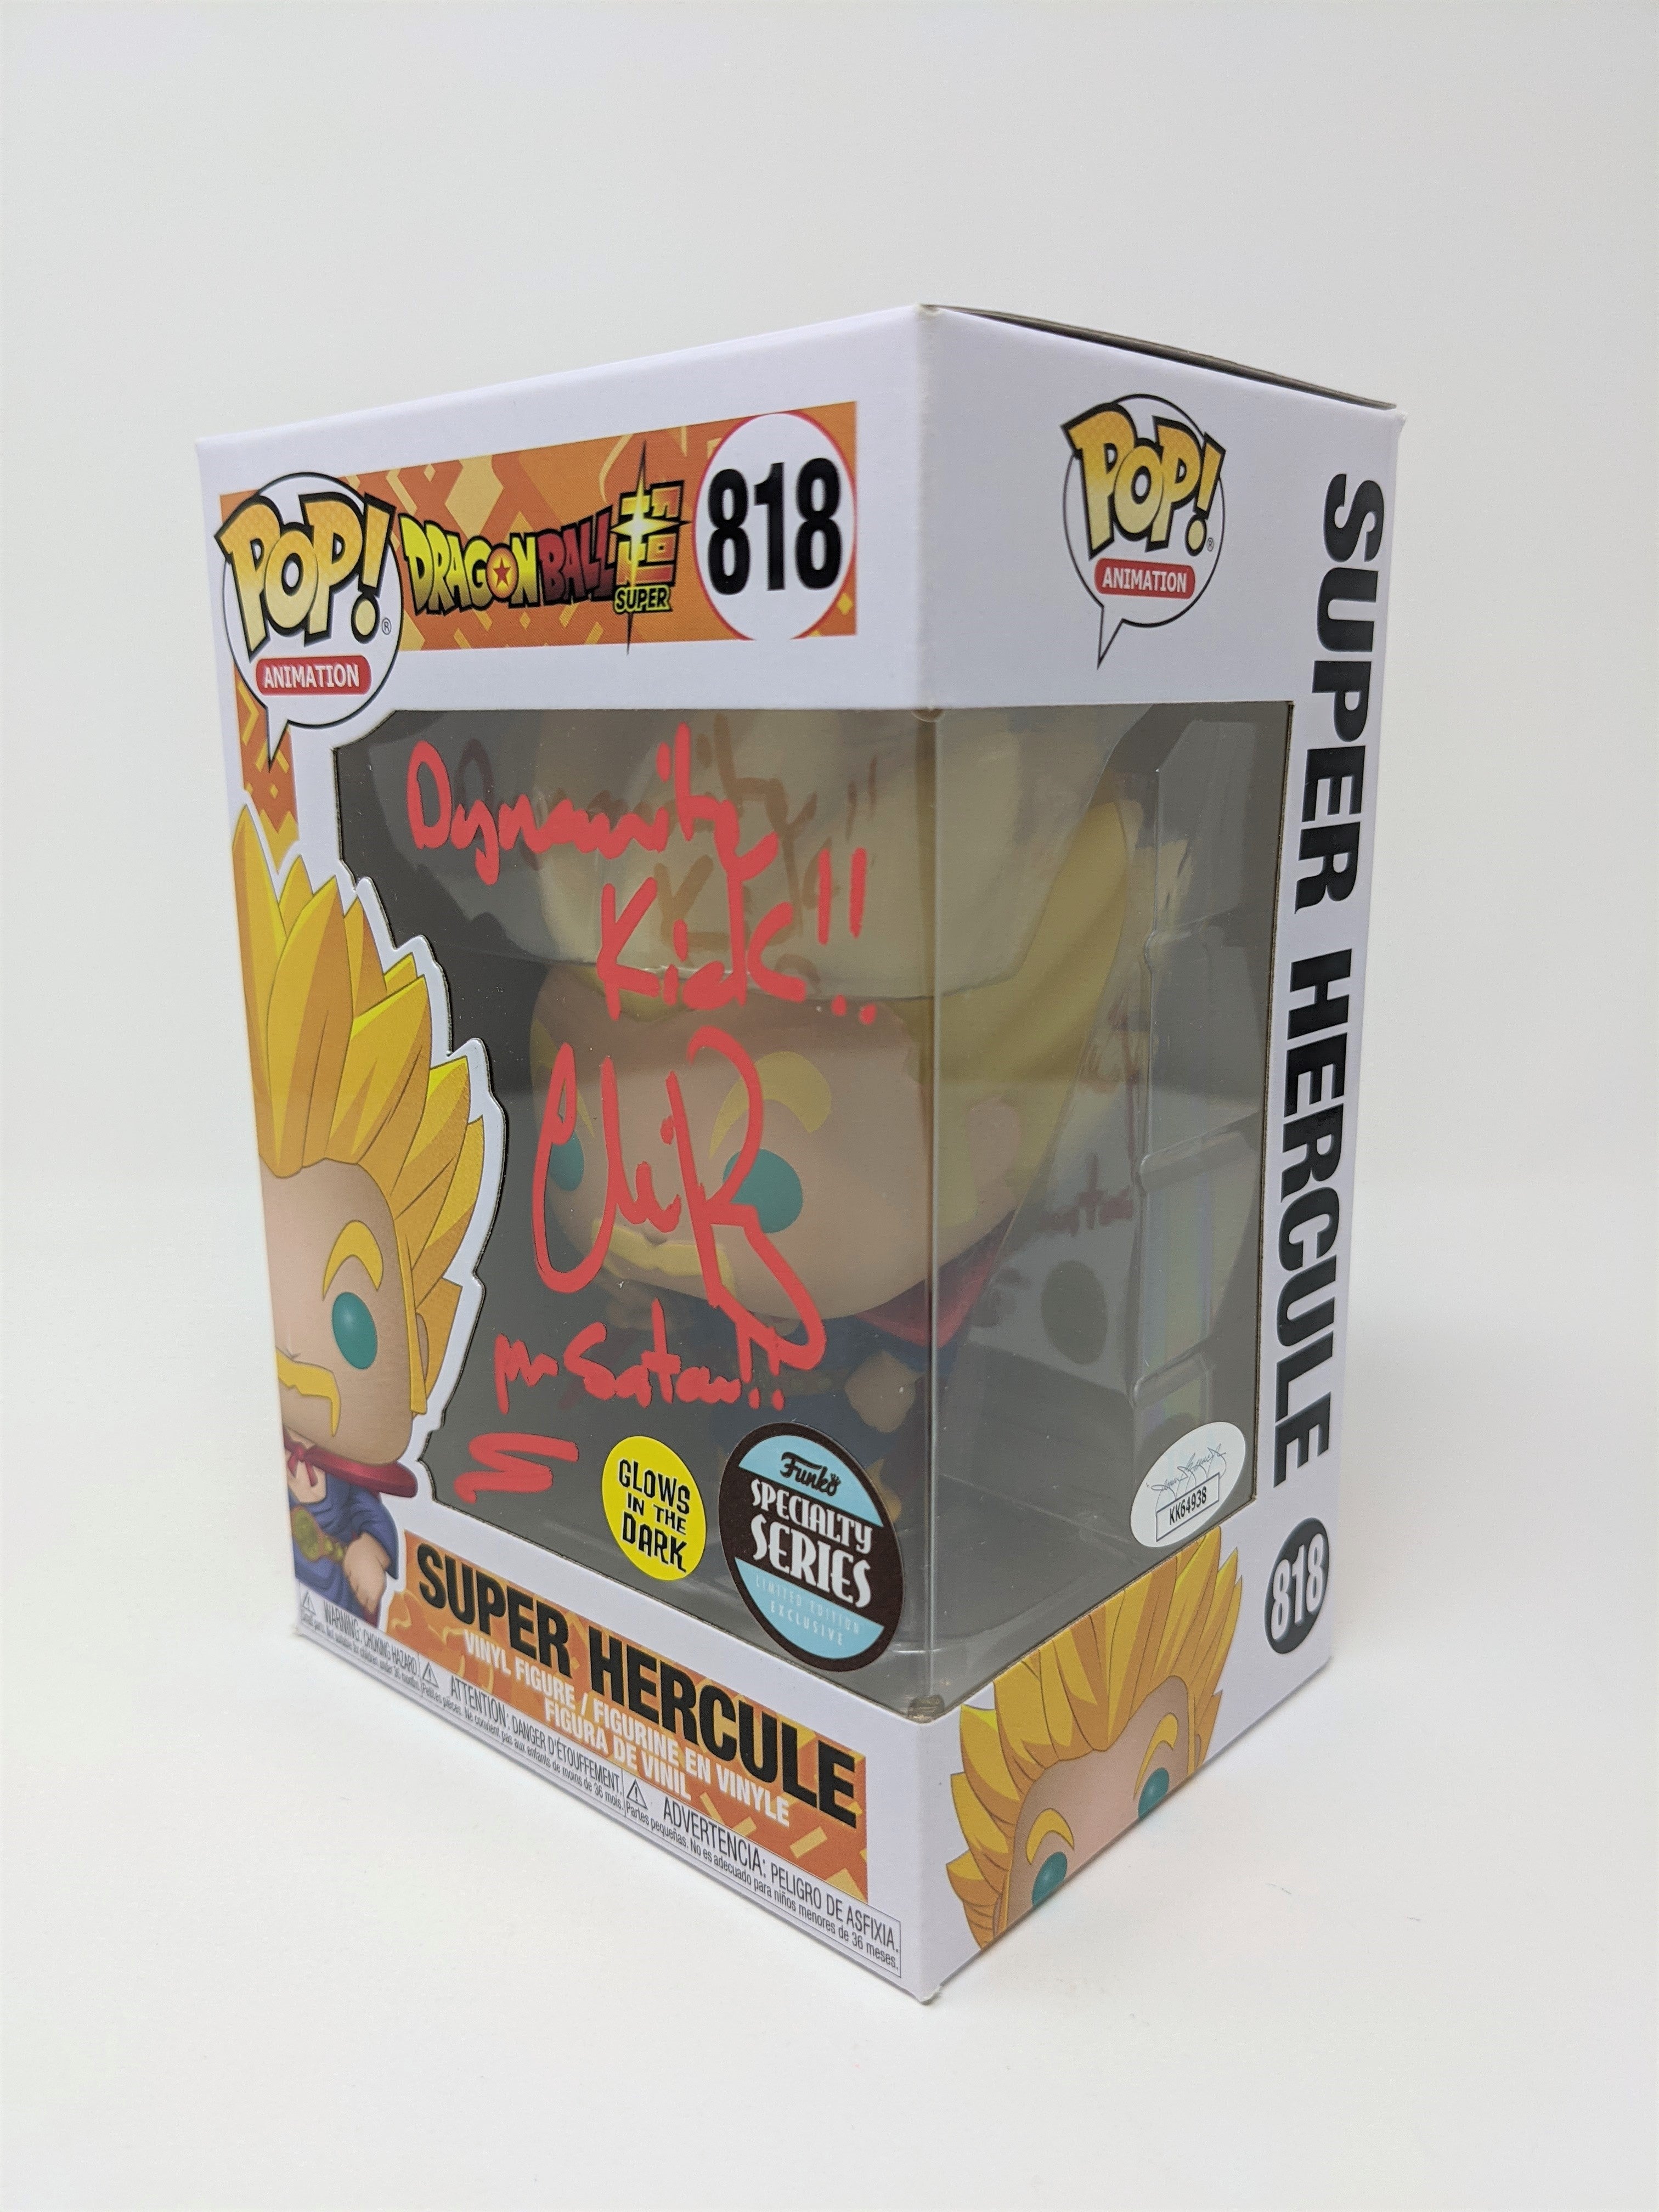 Chris Rager Dragon Ball Super Hercule #818 Exclusive Signed Funko Pop JSA Certified Autograph